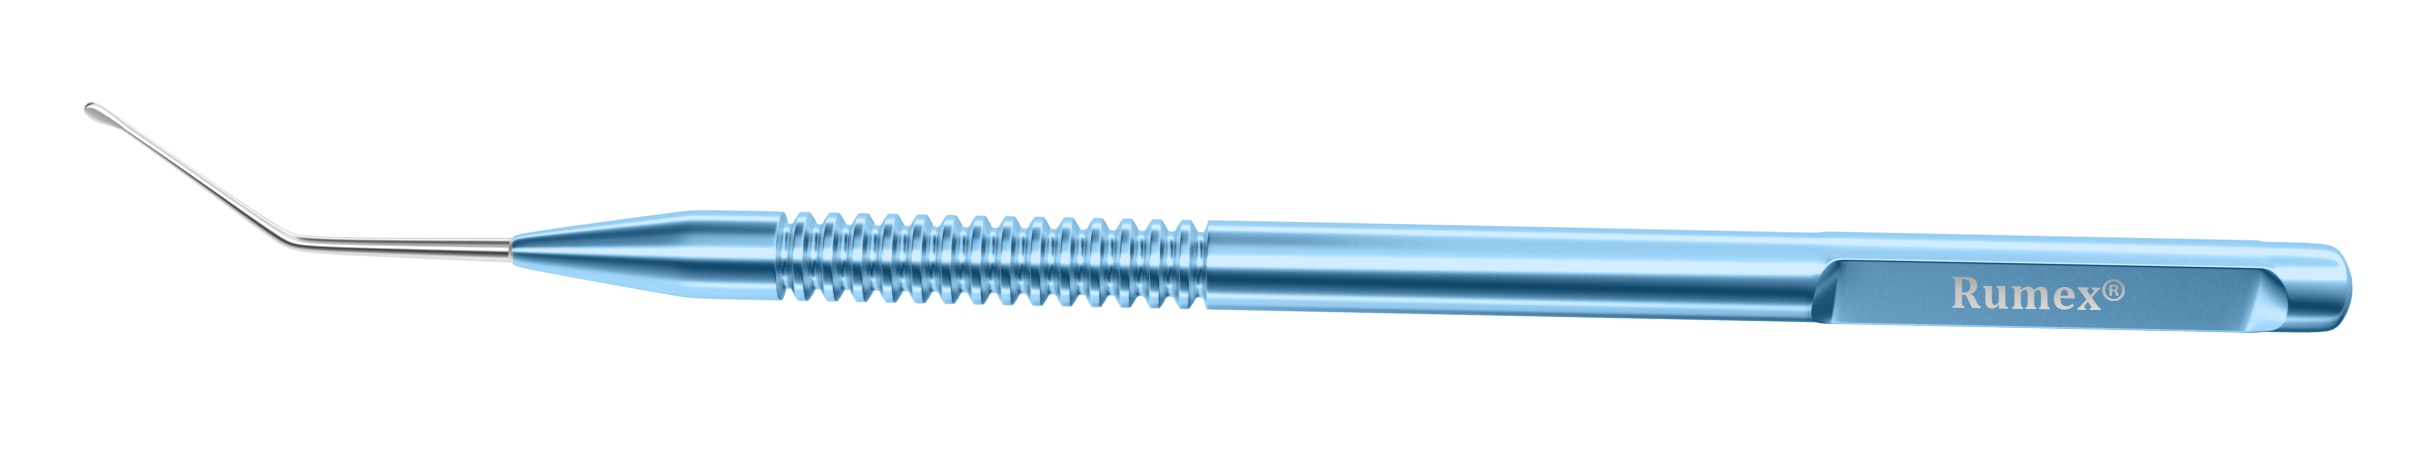 098R 7-093 Drysdale Nucleus Manipulator, Angled, Regular Tip, Round Handle, Length 121 mm, Round Titanium Handle